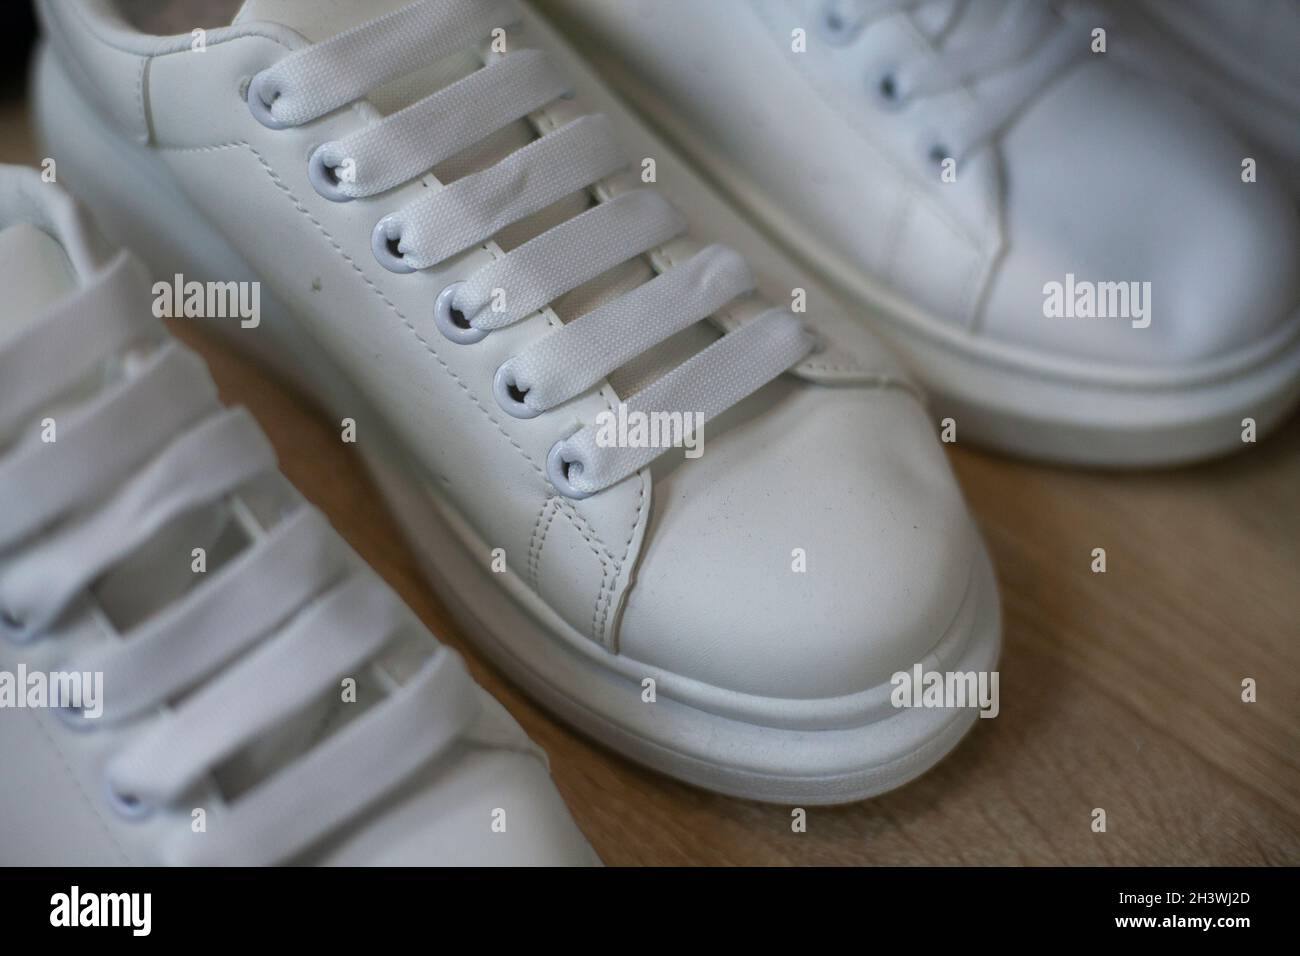 Cheap Shoes Fotos e Imágenes de stock - Alamy